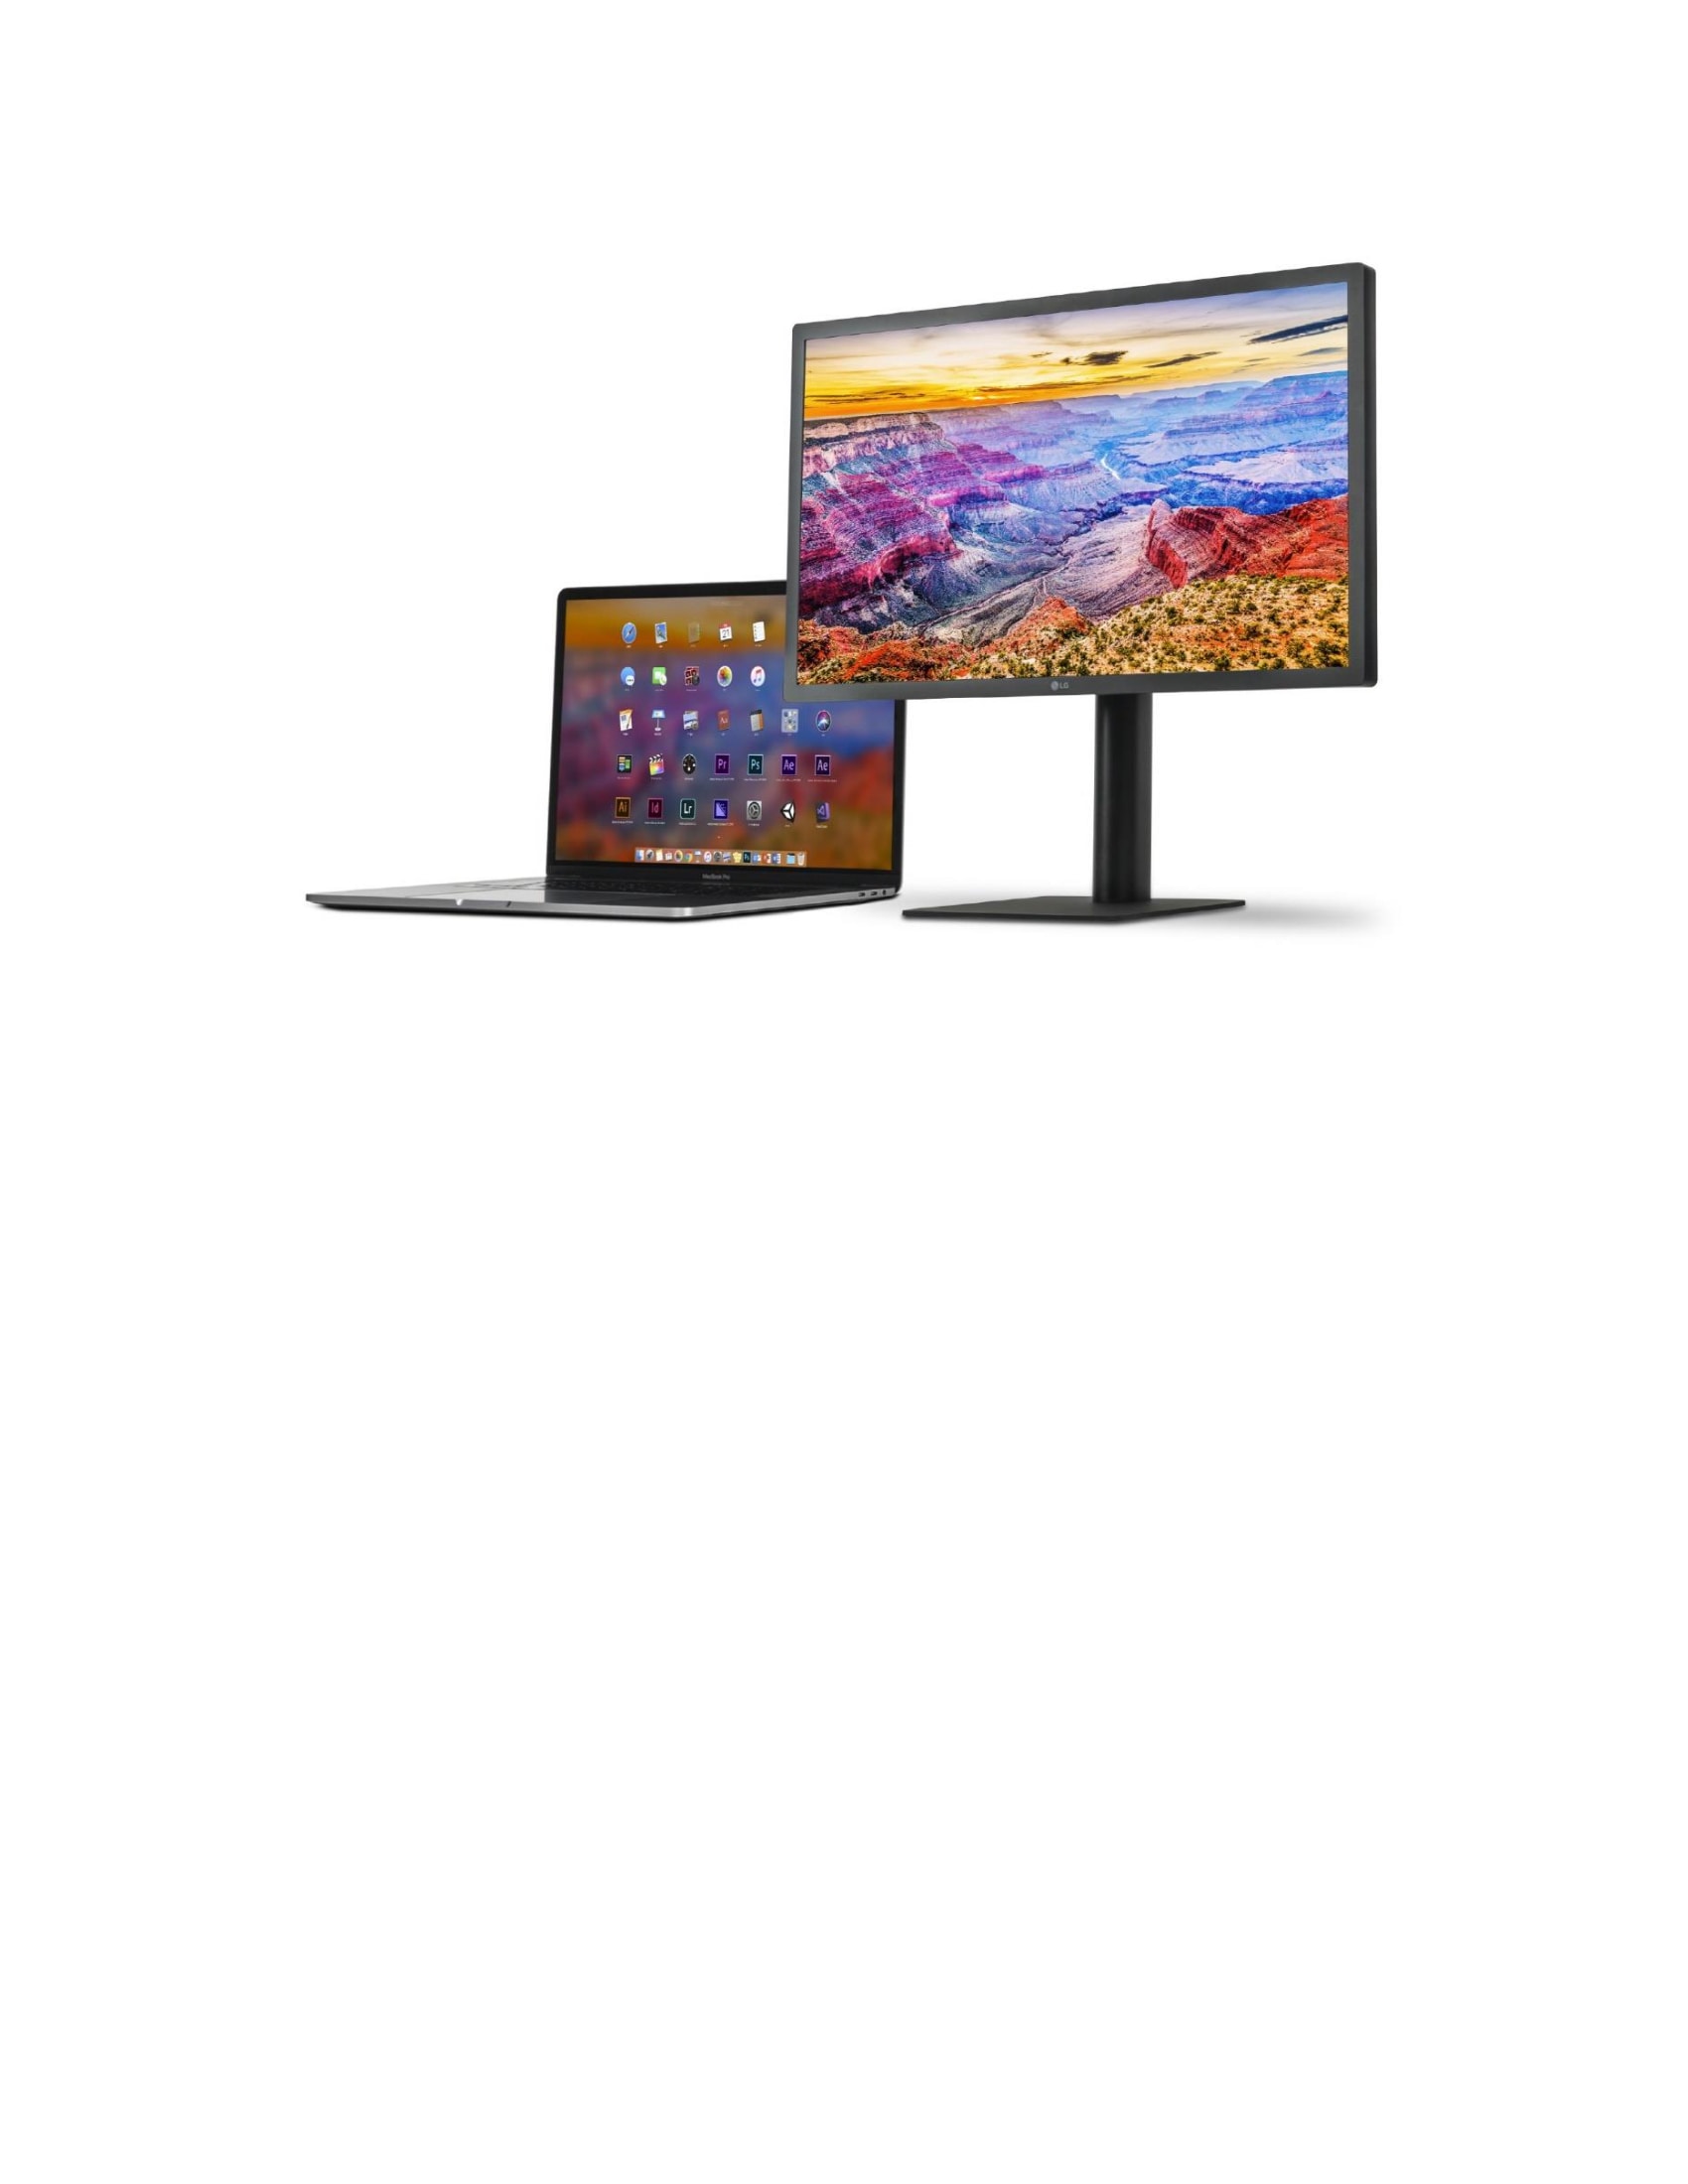 LG Introduces New Ultrafine 5k Display | LG Global